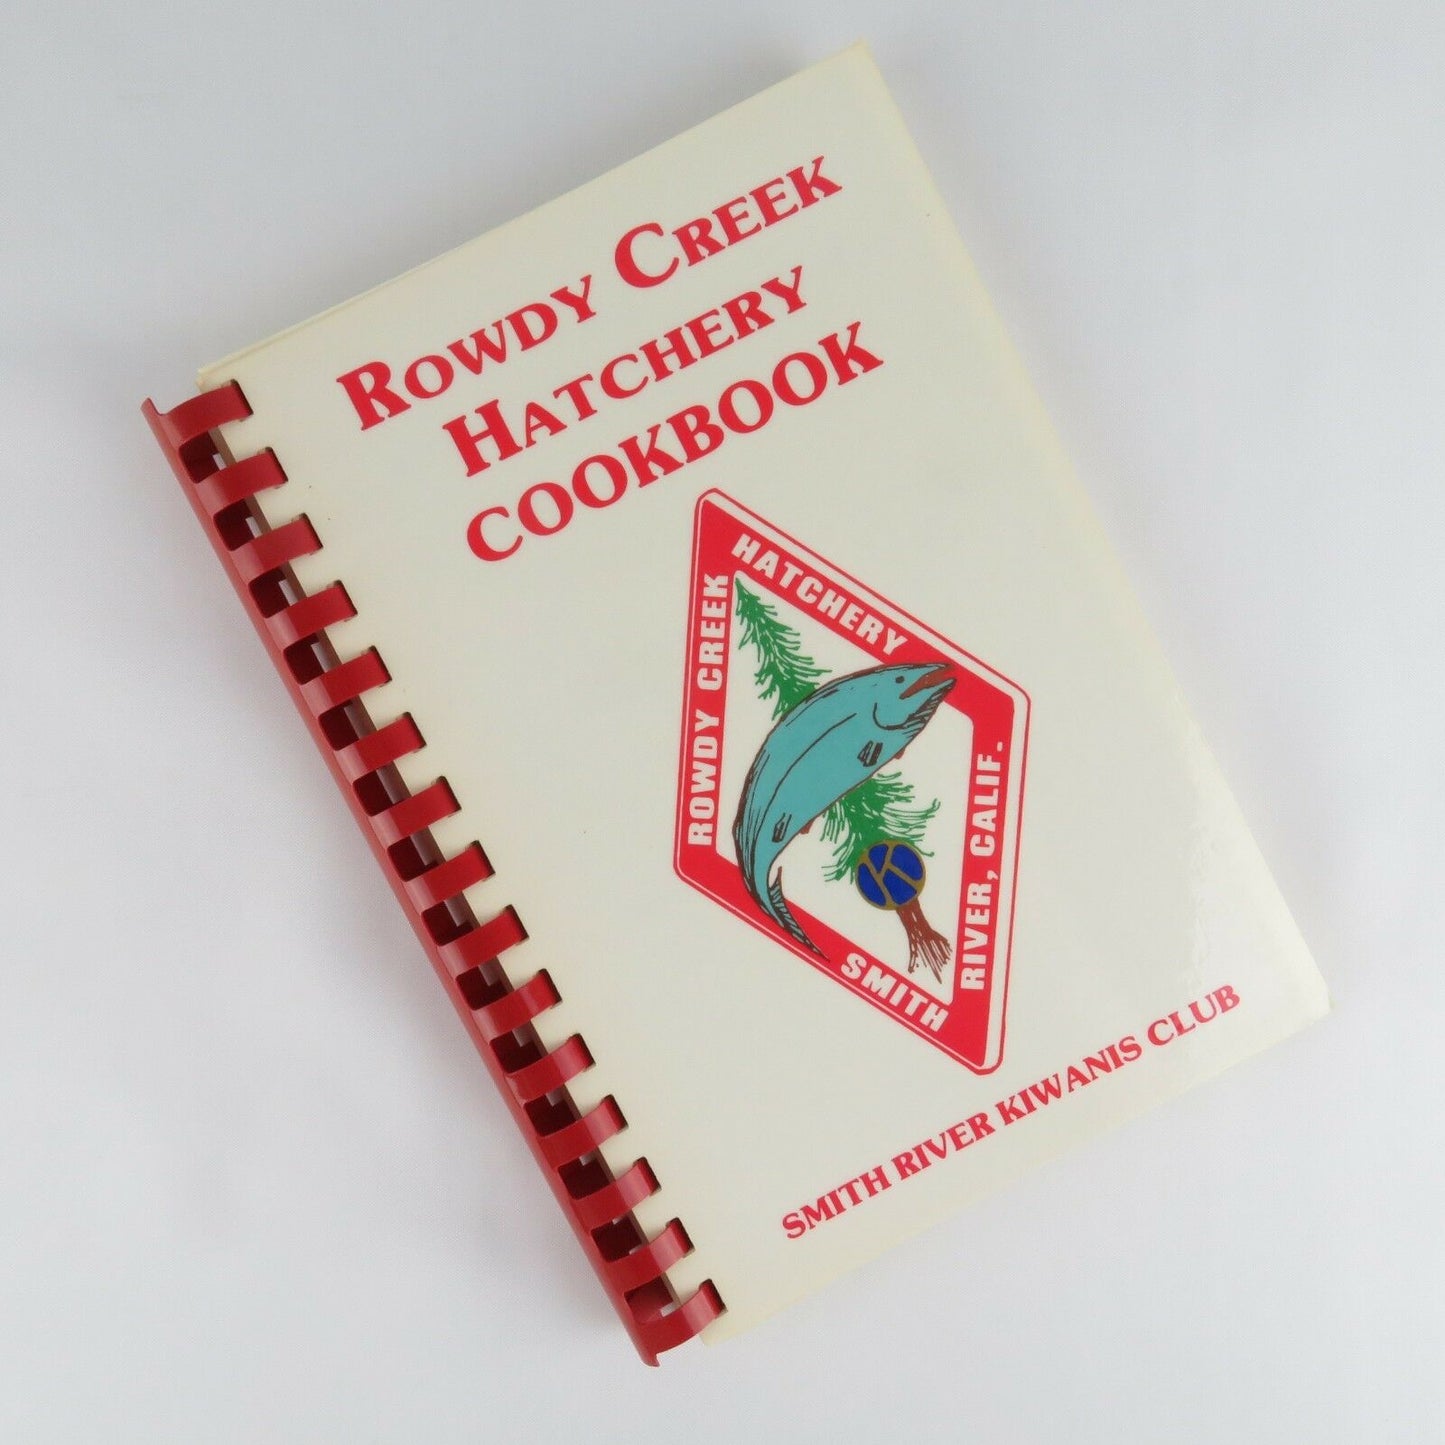 Vintage California Cookbook Smith River Kiwanis Rowdy Creek Hatchery Cookbook - At Grandma's Table